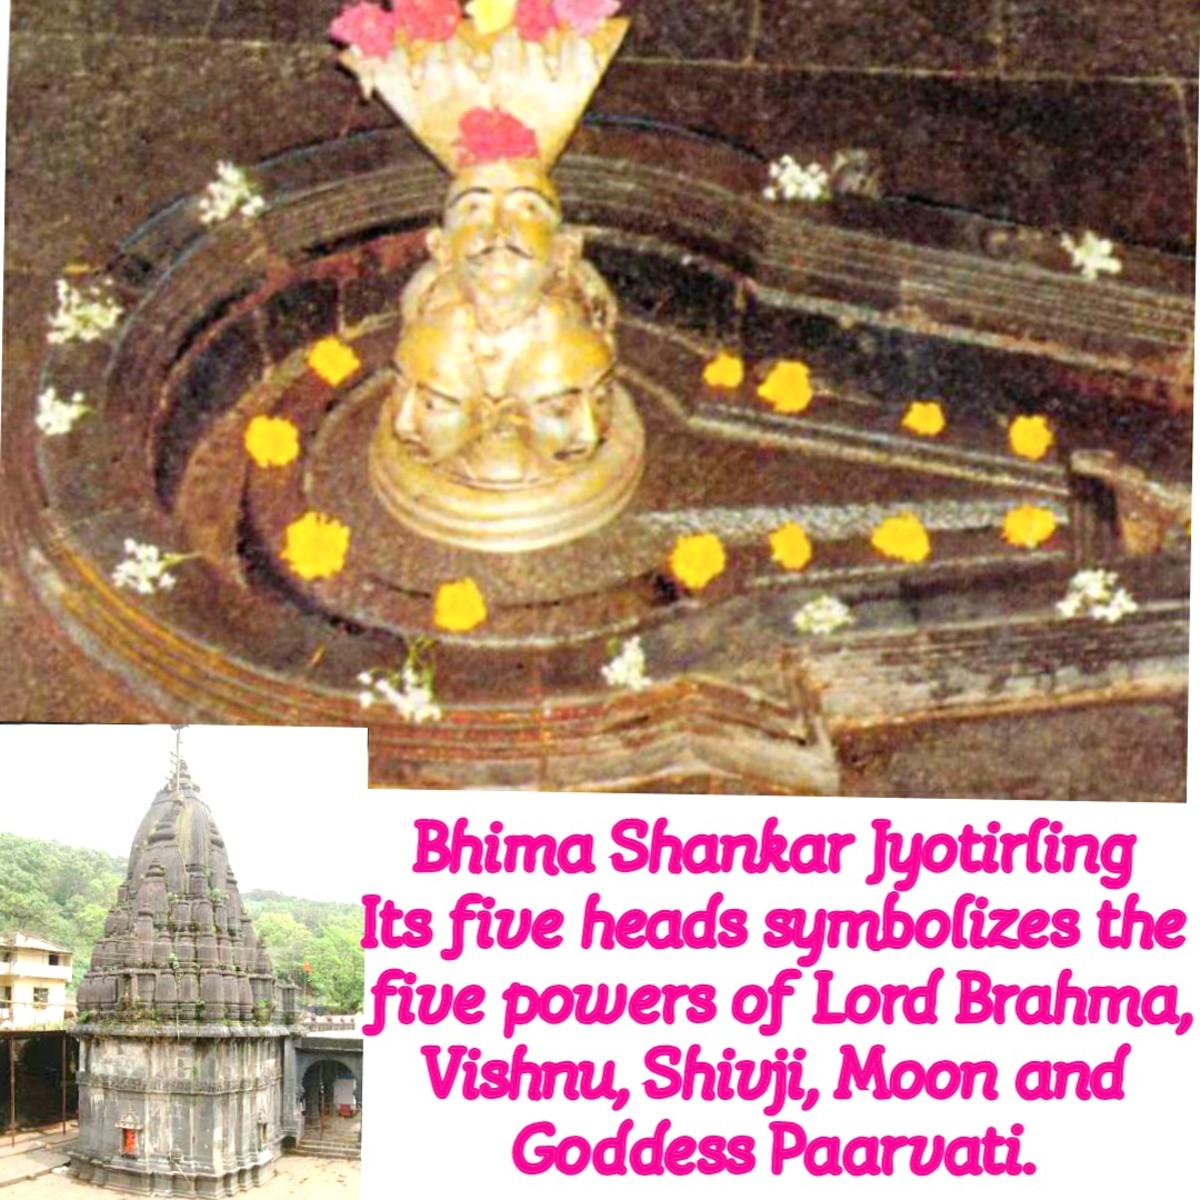 Bhima Shankar Jyotirling tells the story of the king Bhima and Lord Shivji